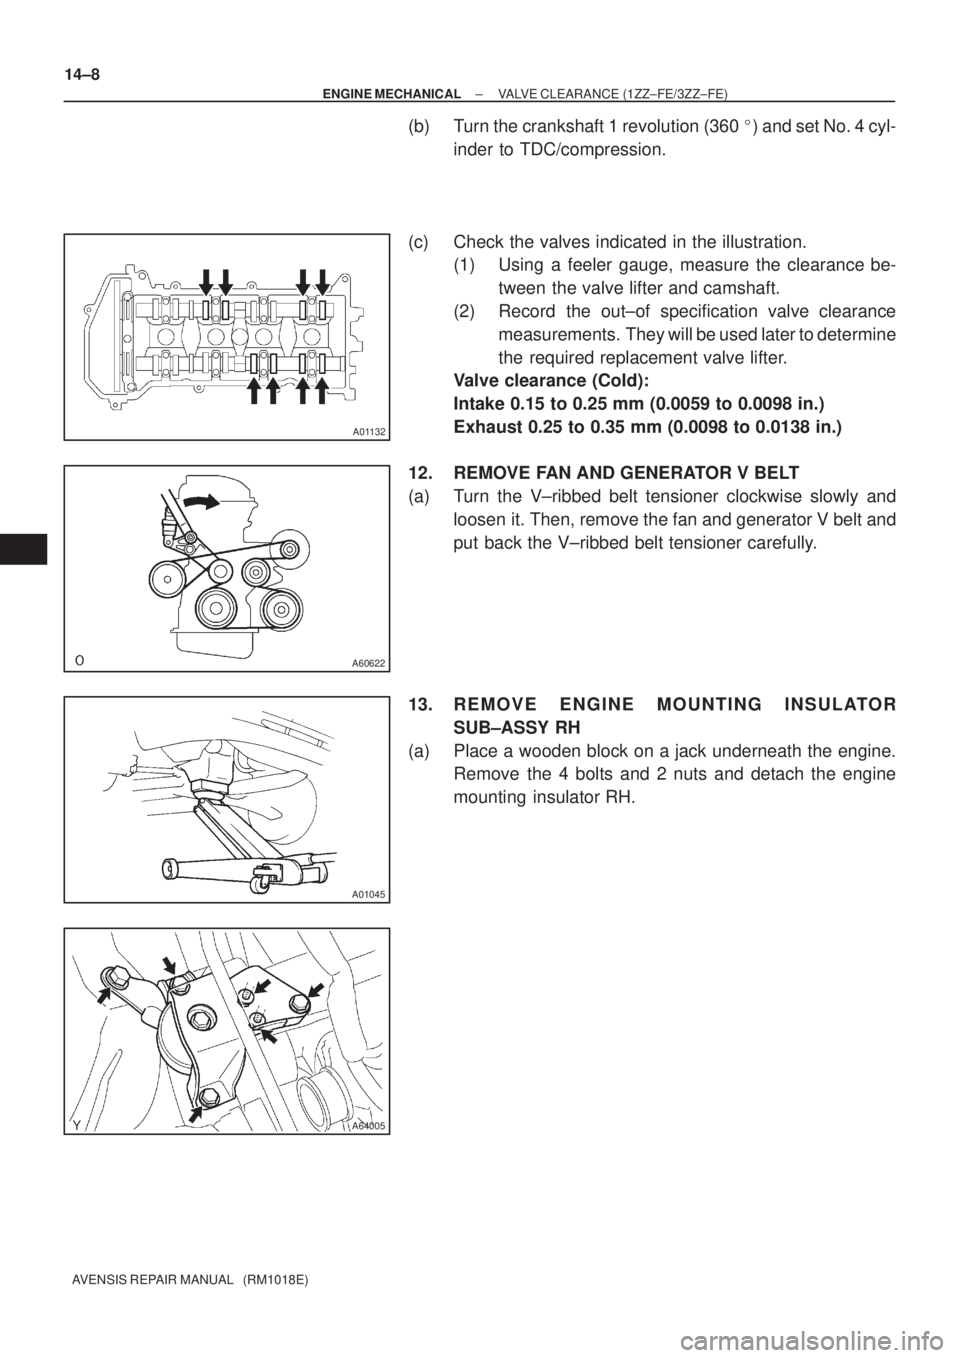 TOYOTA AVENSIS 2005  Service Repair Manual A01132
A60622
A01045
A64005
14±8
± ENGINE MECHANICALVALVE CLEARANCE (1ZZ±FE/3ZZ±FE)
AVENSIS REPAIR MANUAL   (RM1018E)
(b) Turn the crankshaft 1 revolution (360 ) and set No. 4 cyl-
inder to TDC/c